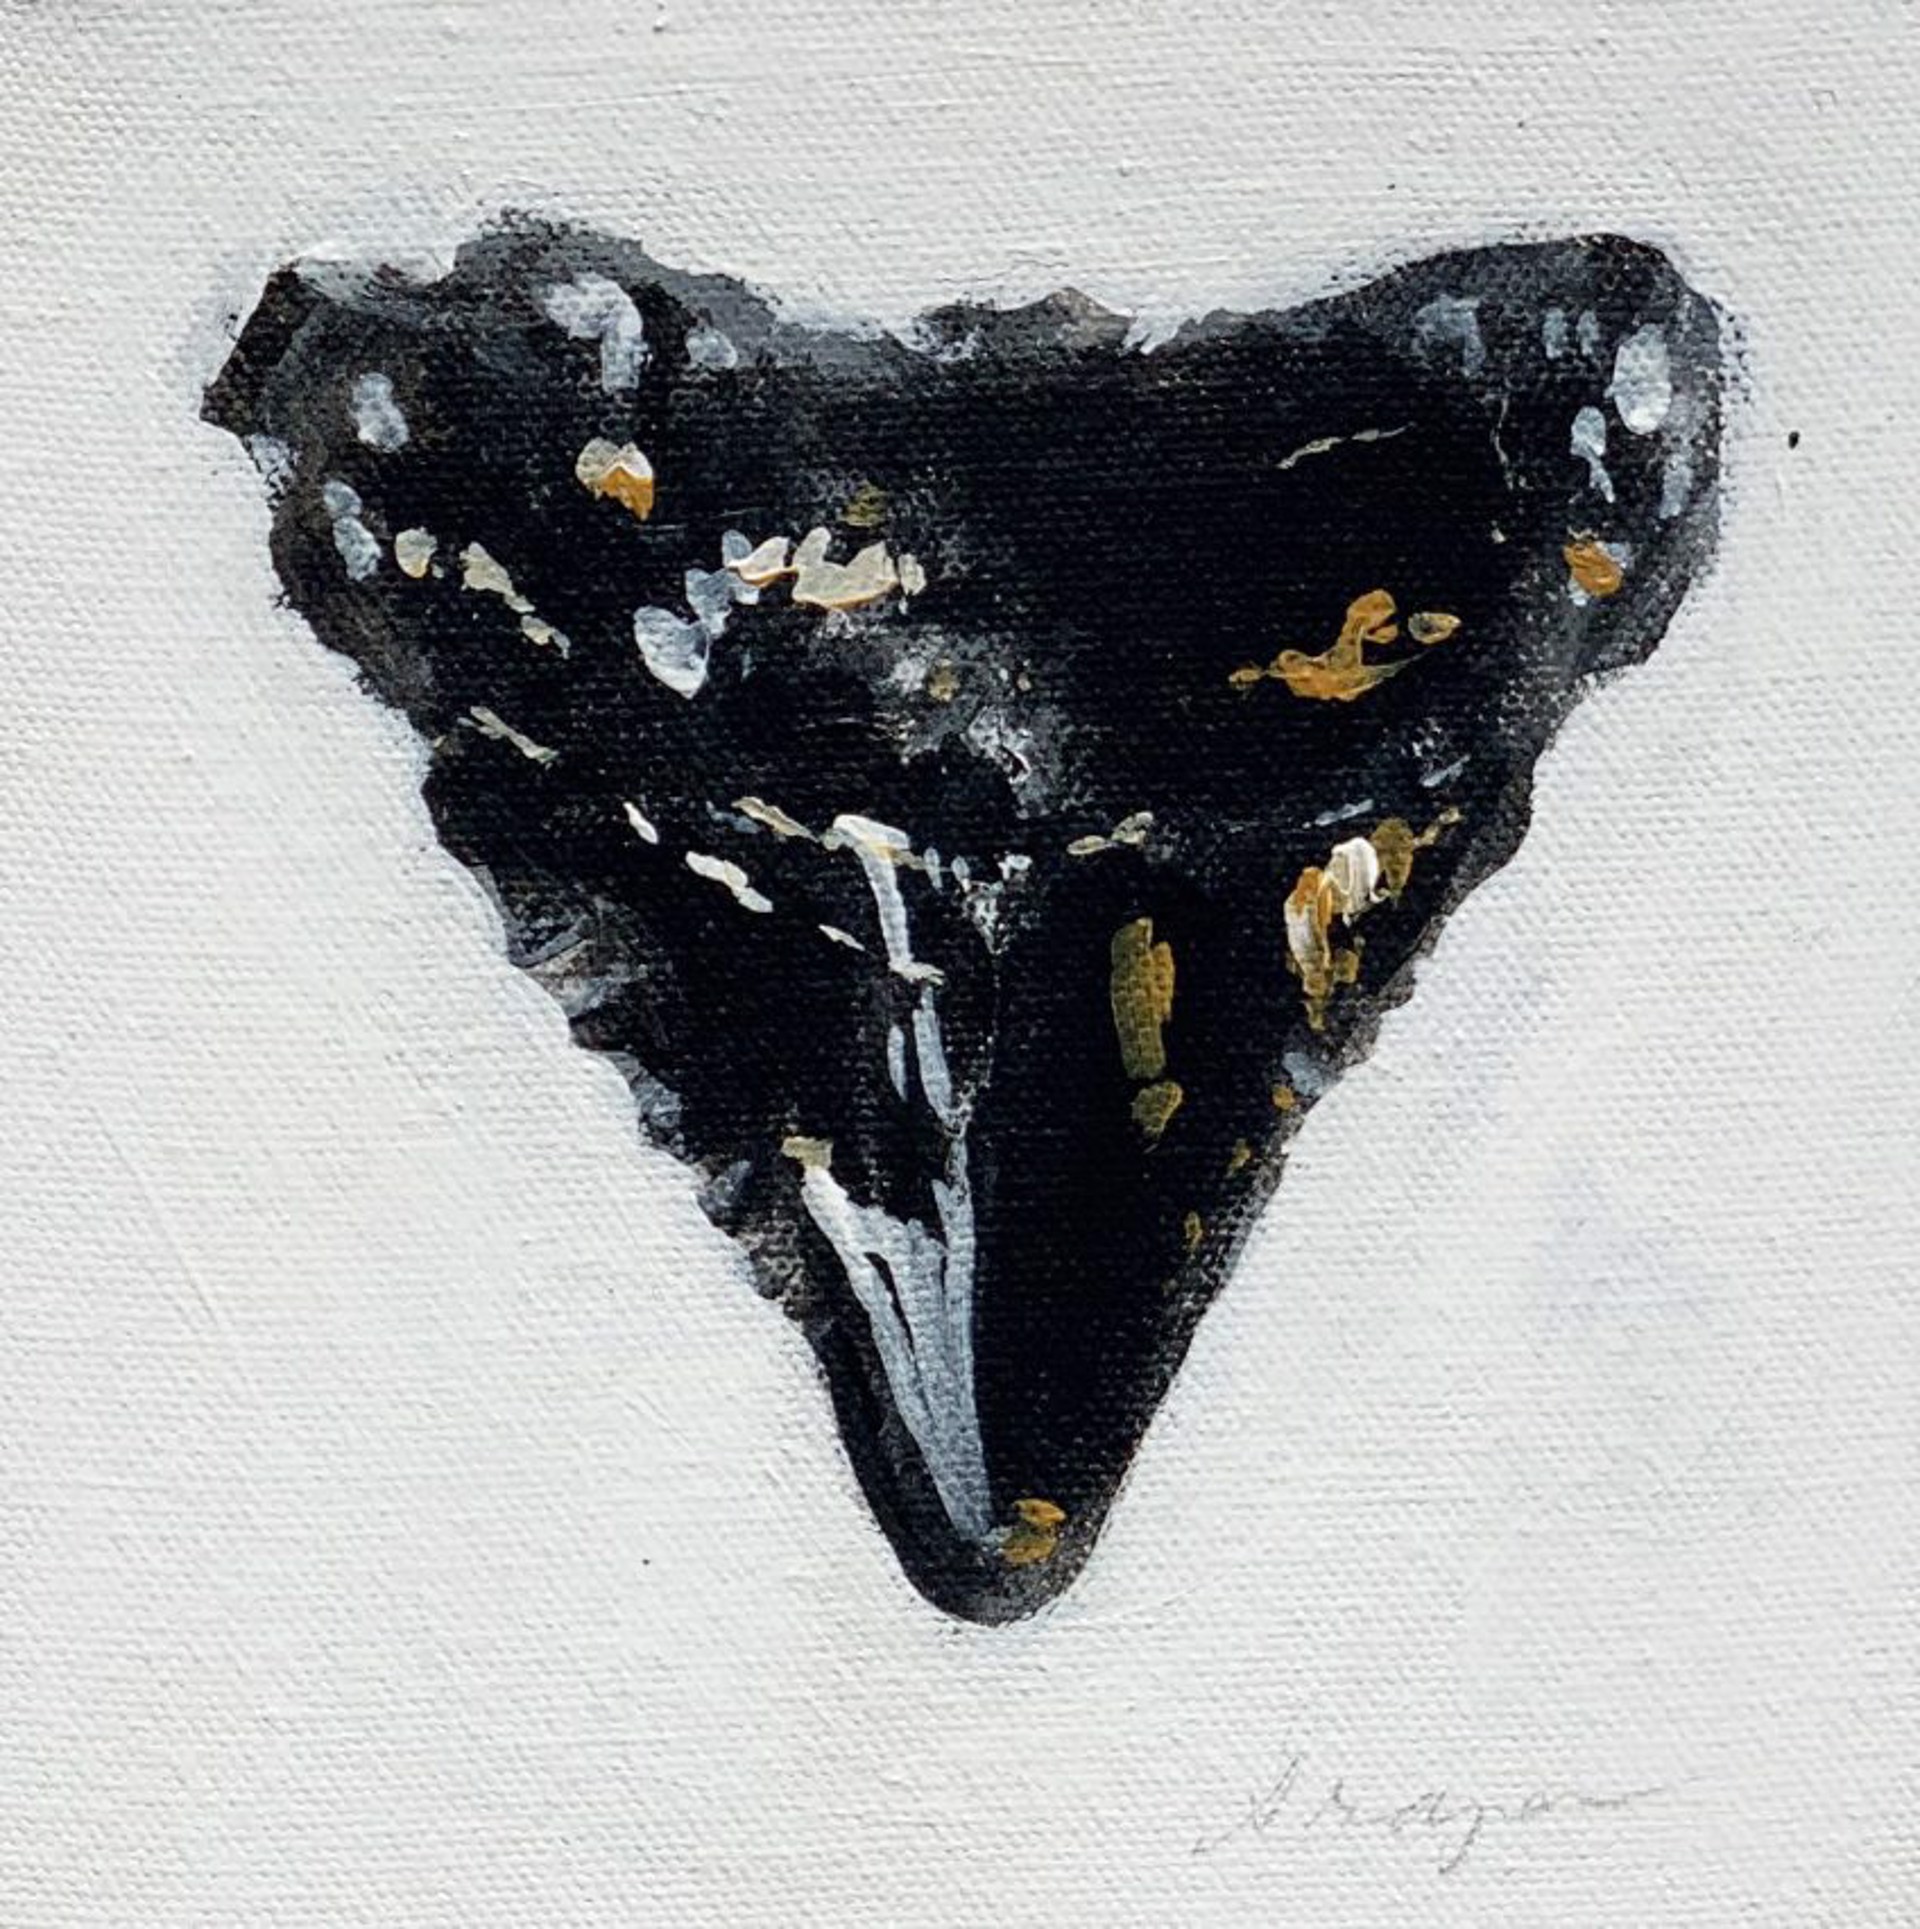 Sharksteeth-6x6 by Jim Draper